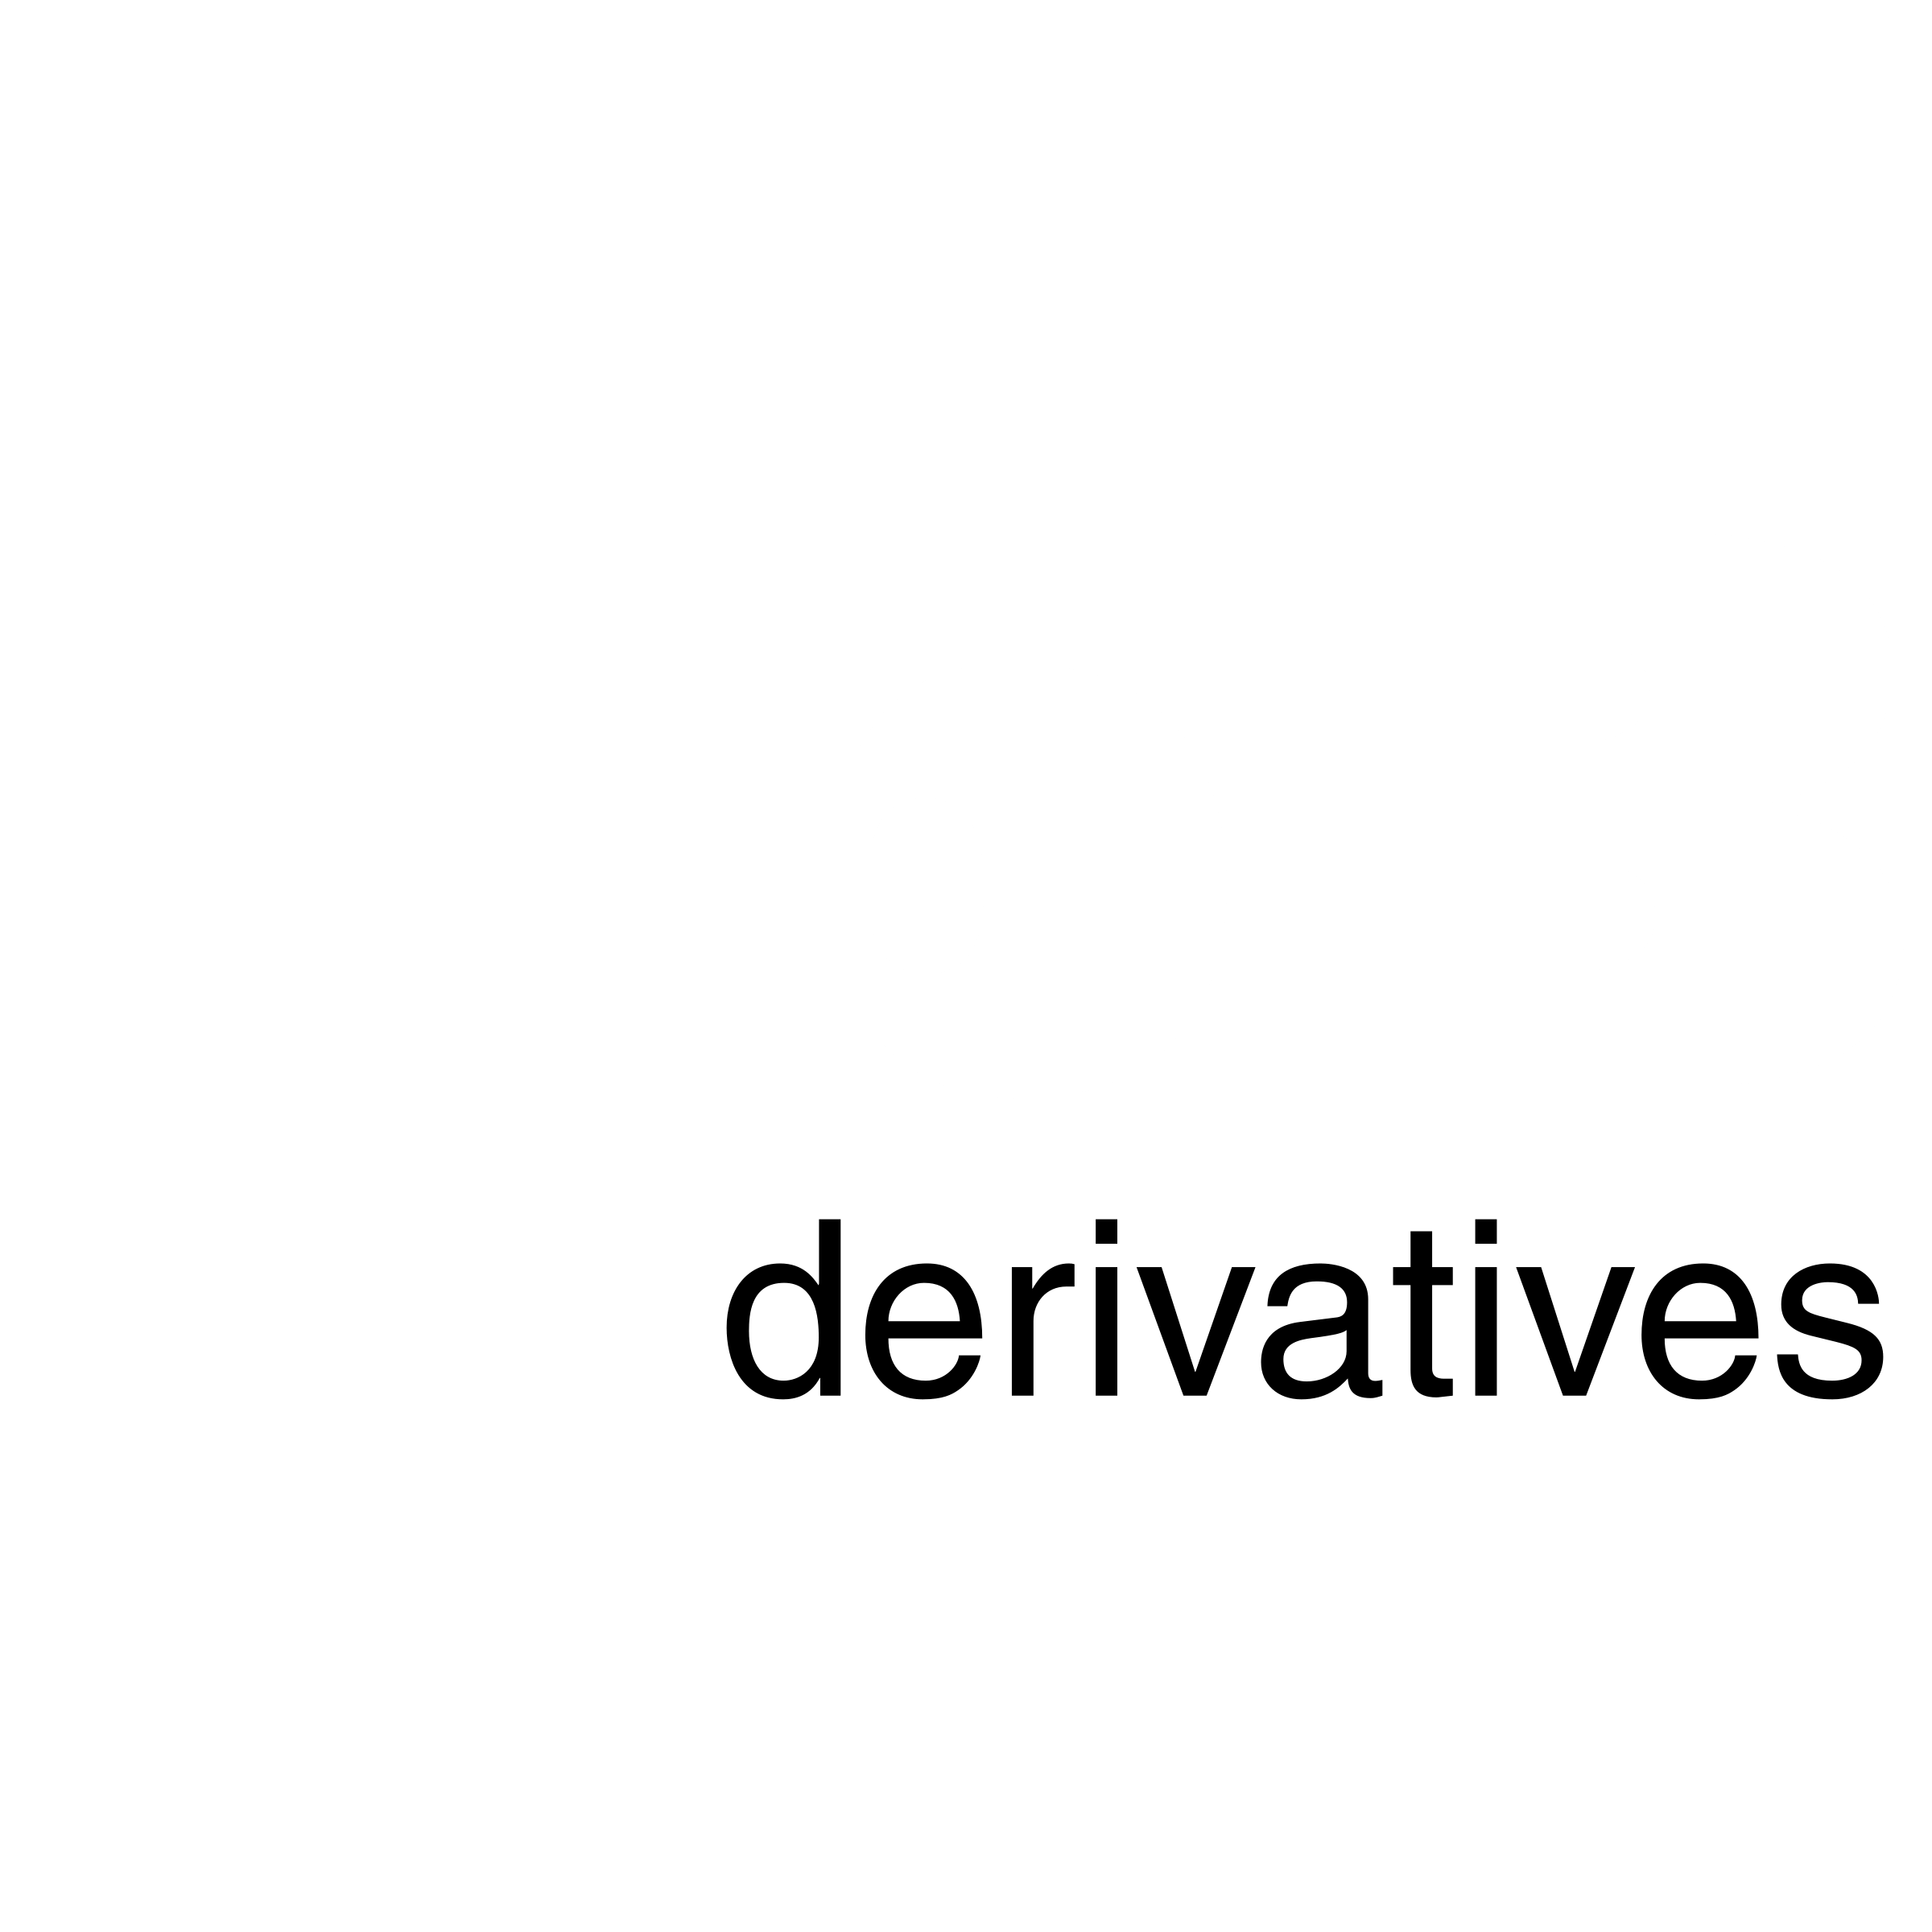 EPB Logo - EpB Logo PNG Transparent & SVG Vector